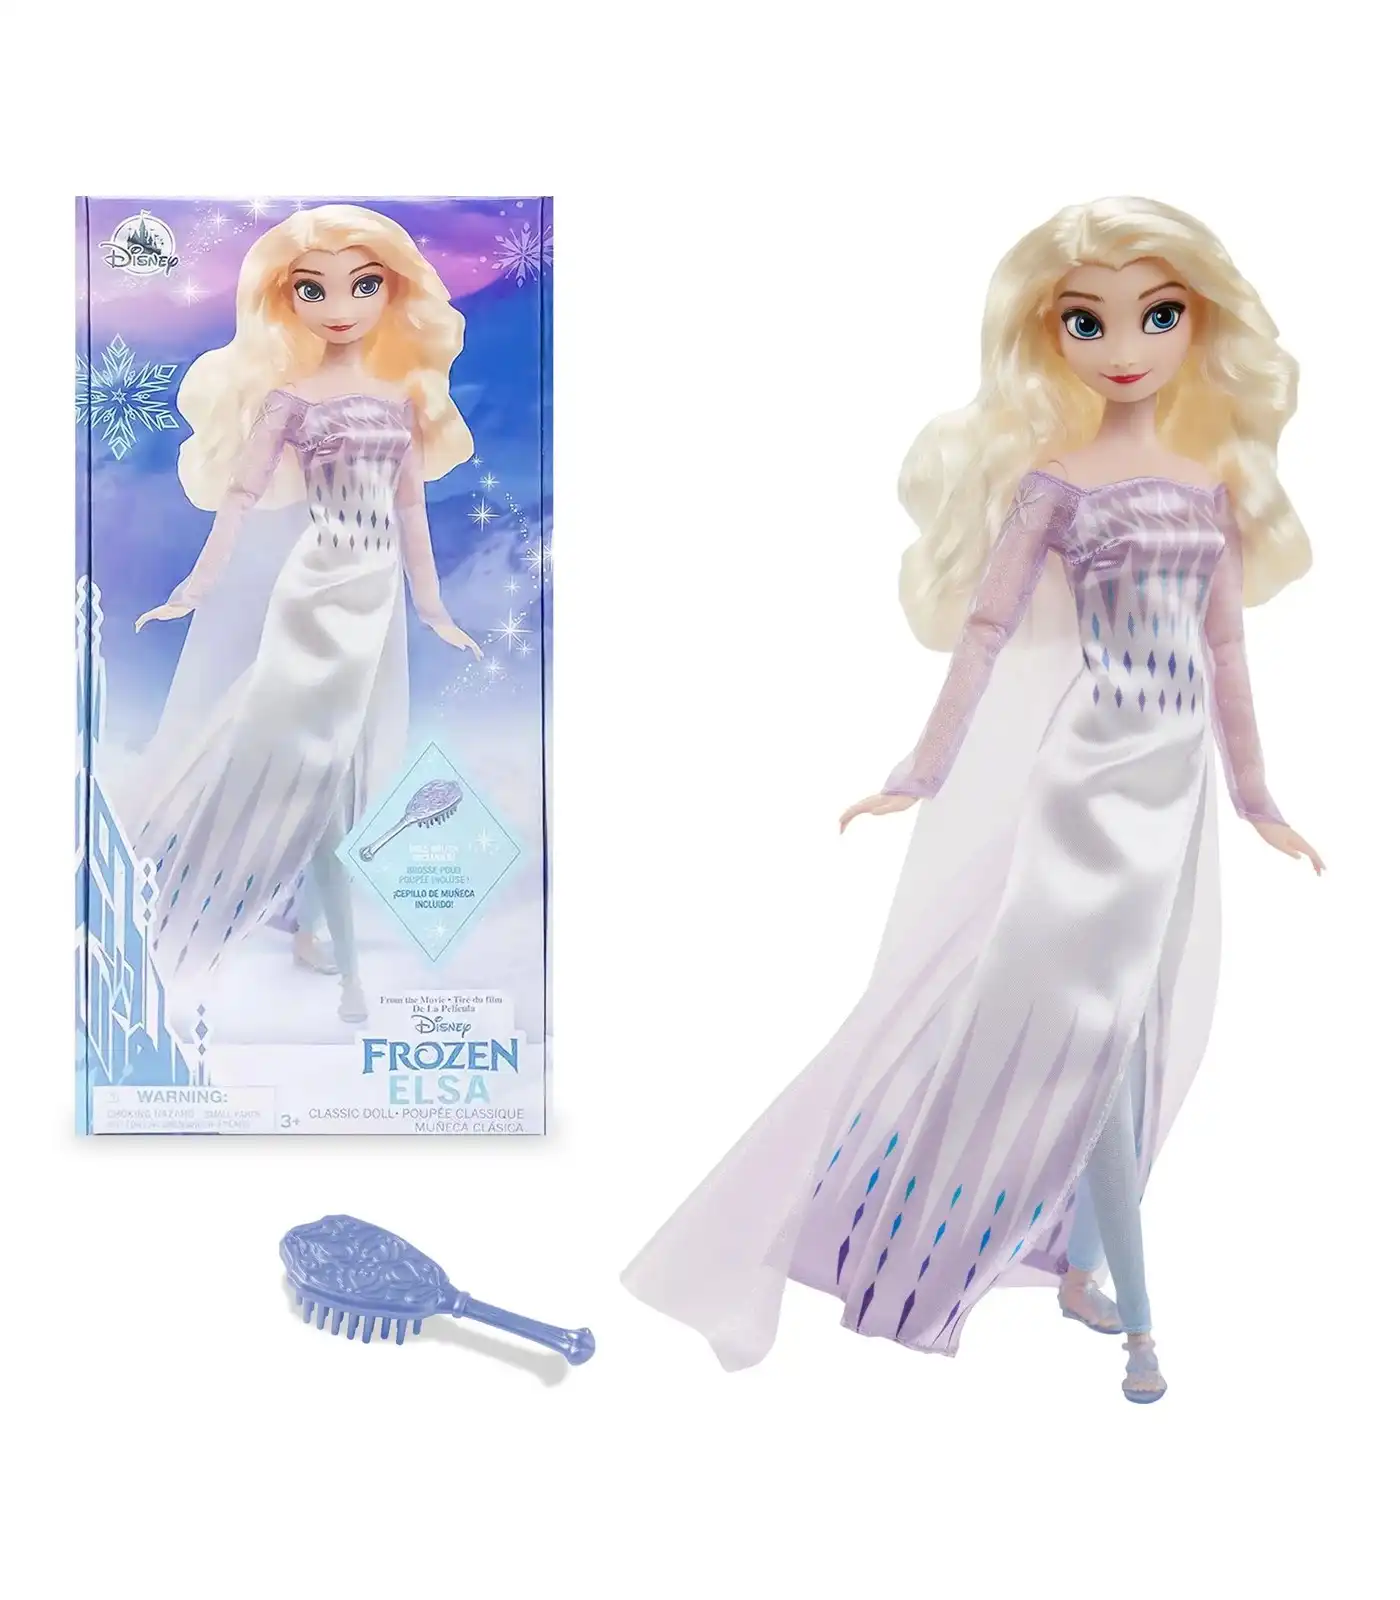 Disney Classic Doll - Elsa